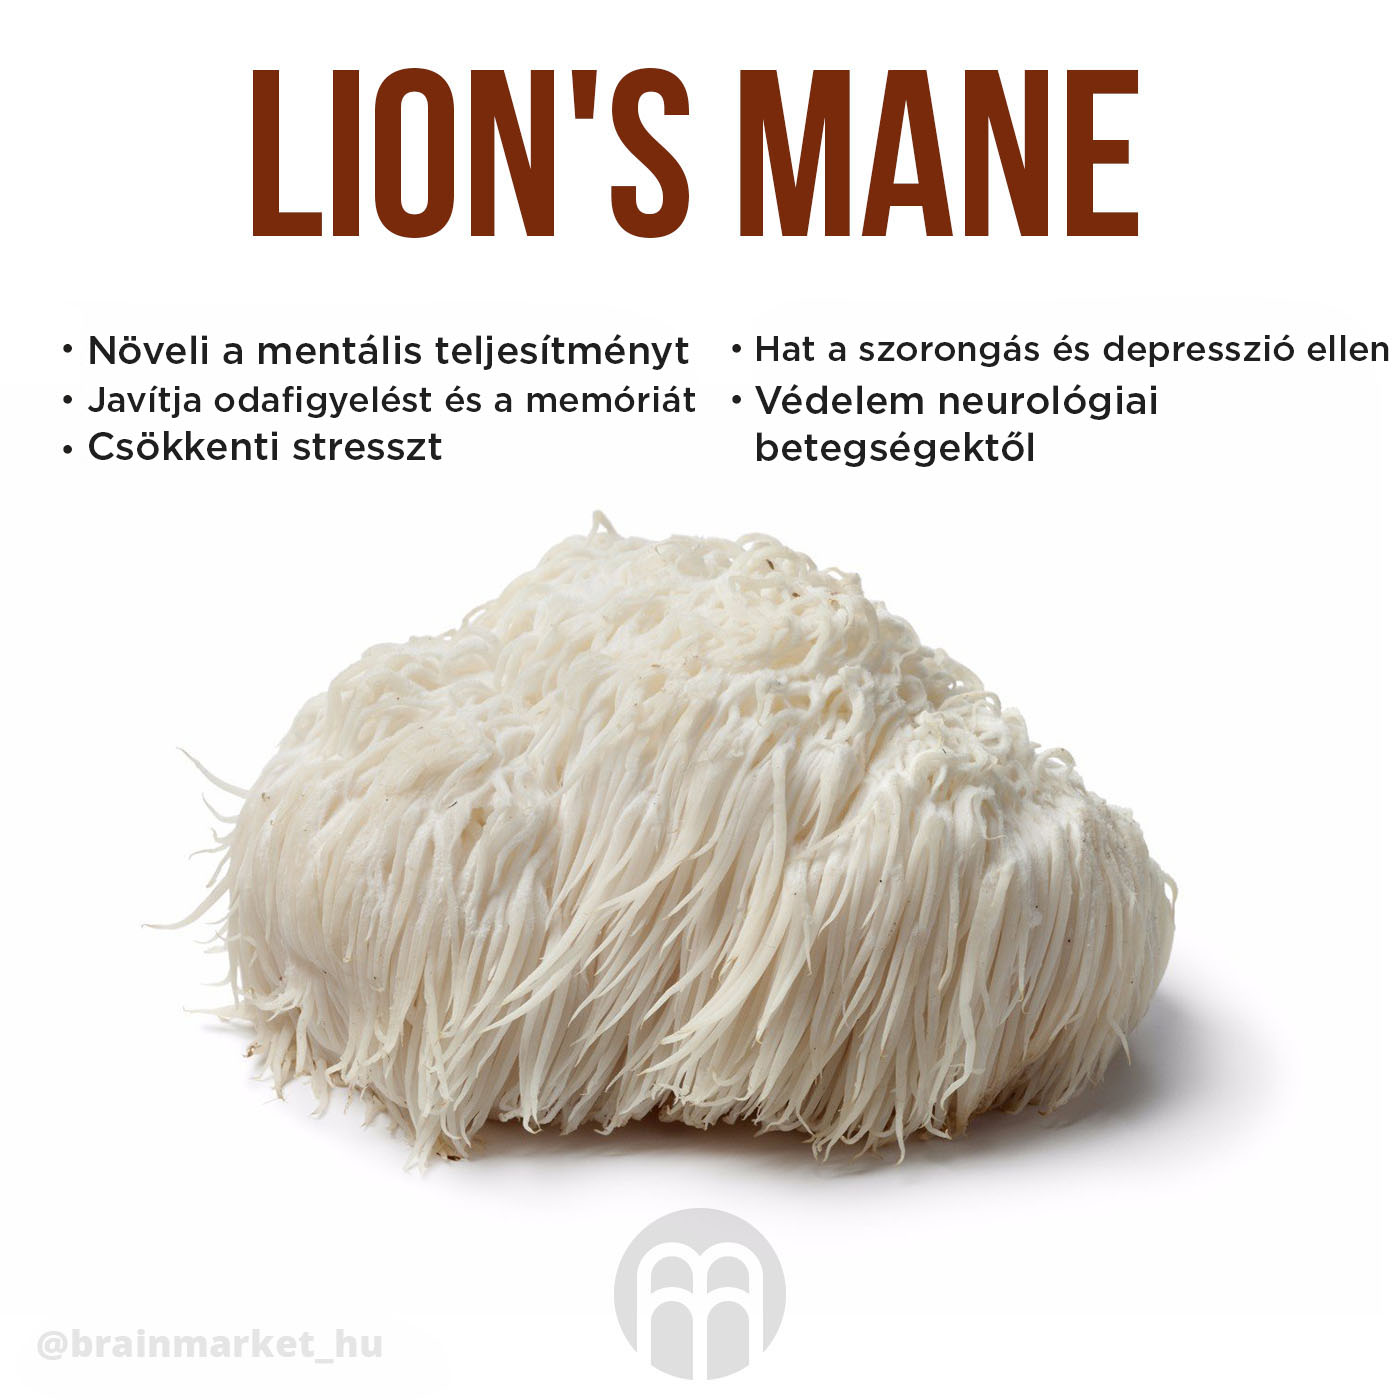 lions_mane_infografika_brainmarket_hu (1)